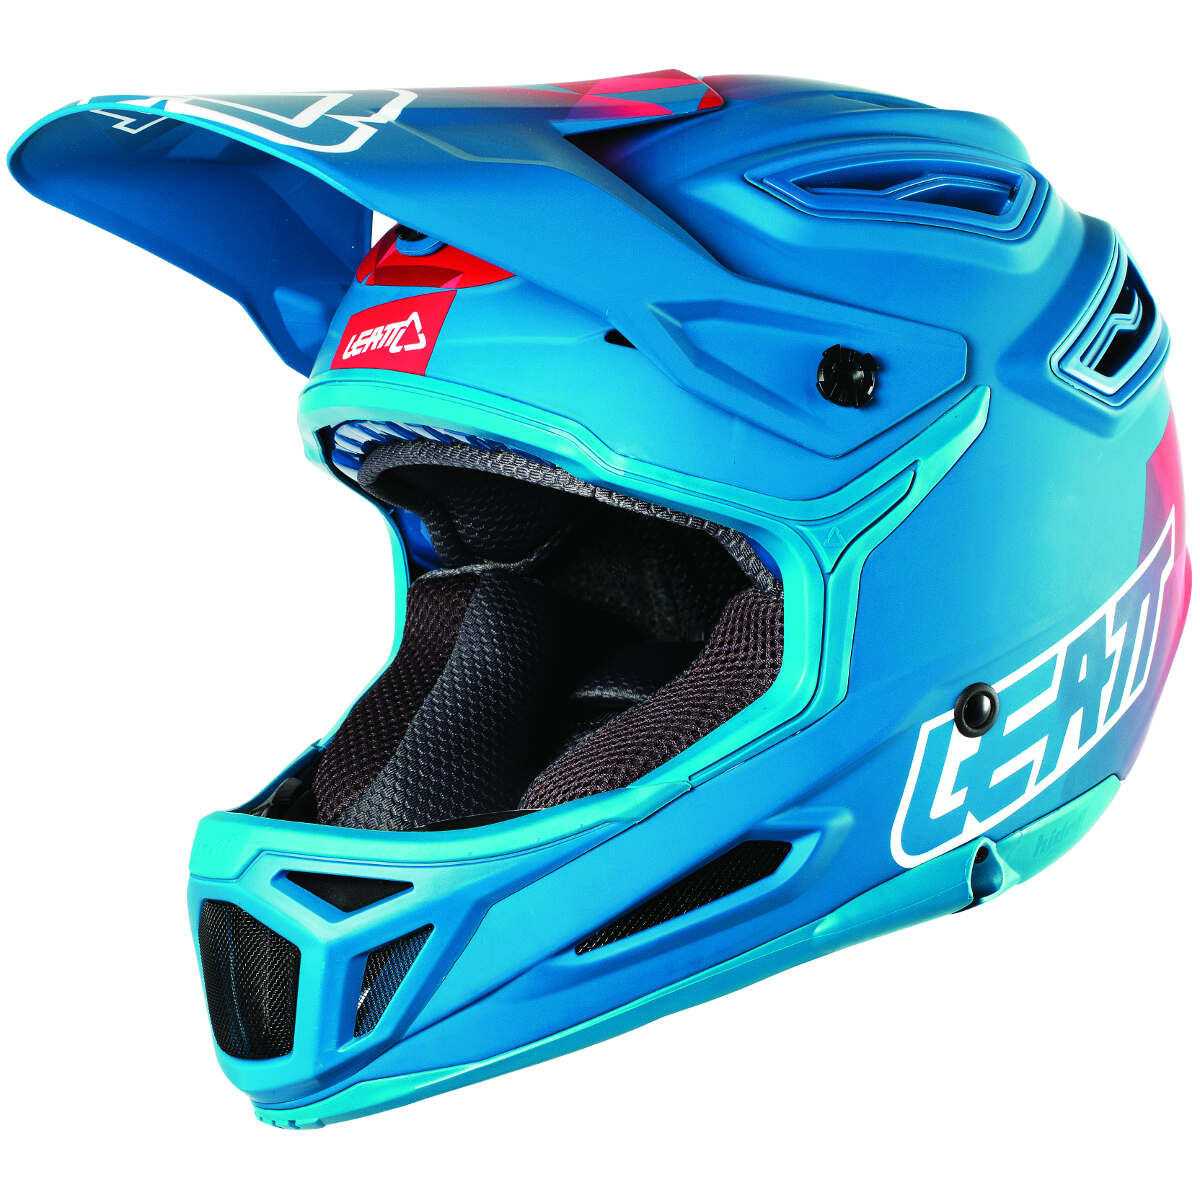 Leatt Downhill MTB Helmet DBX 5.0 Composite Fuel/Red